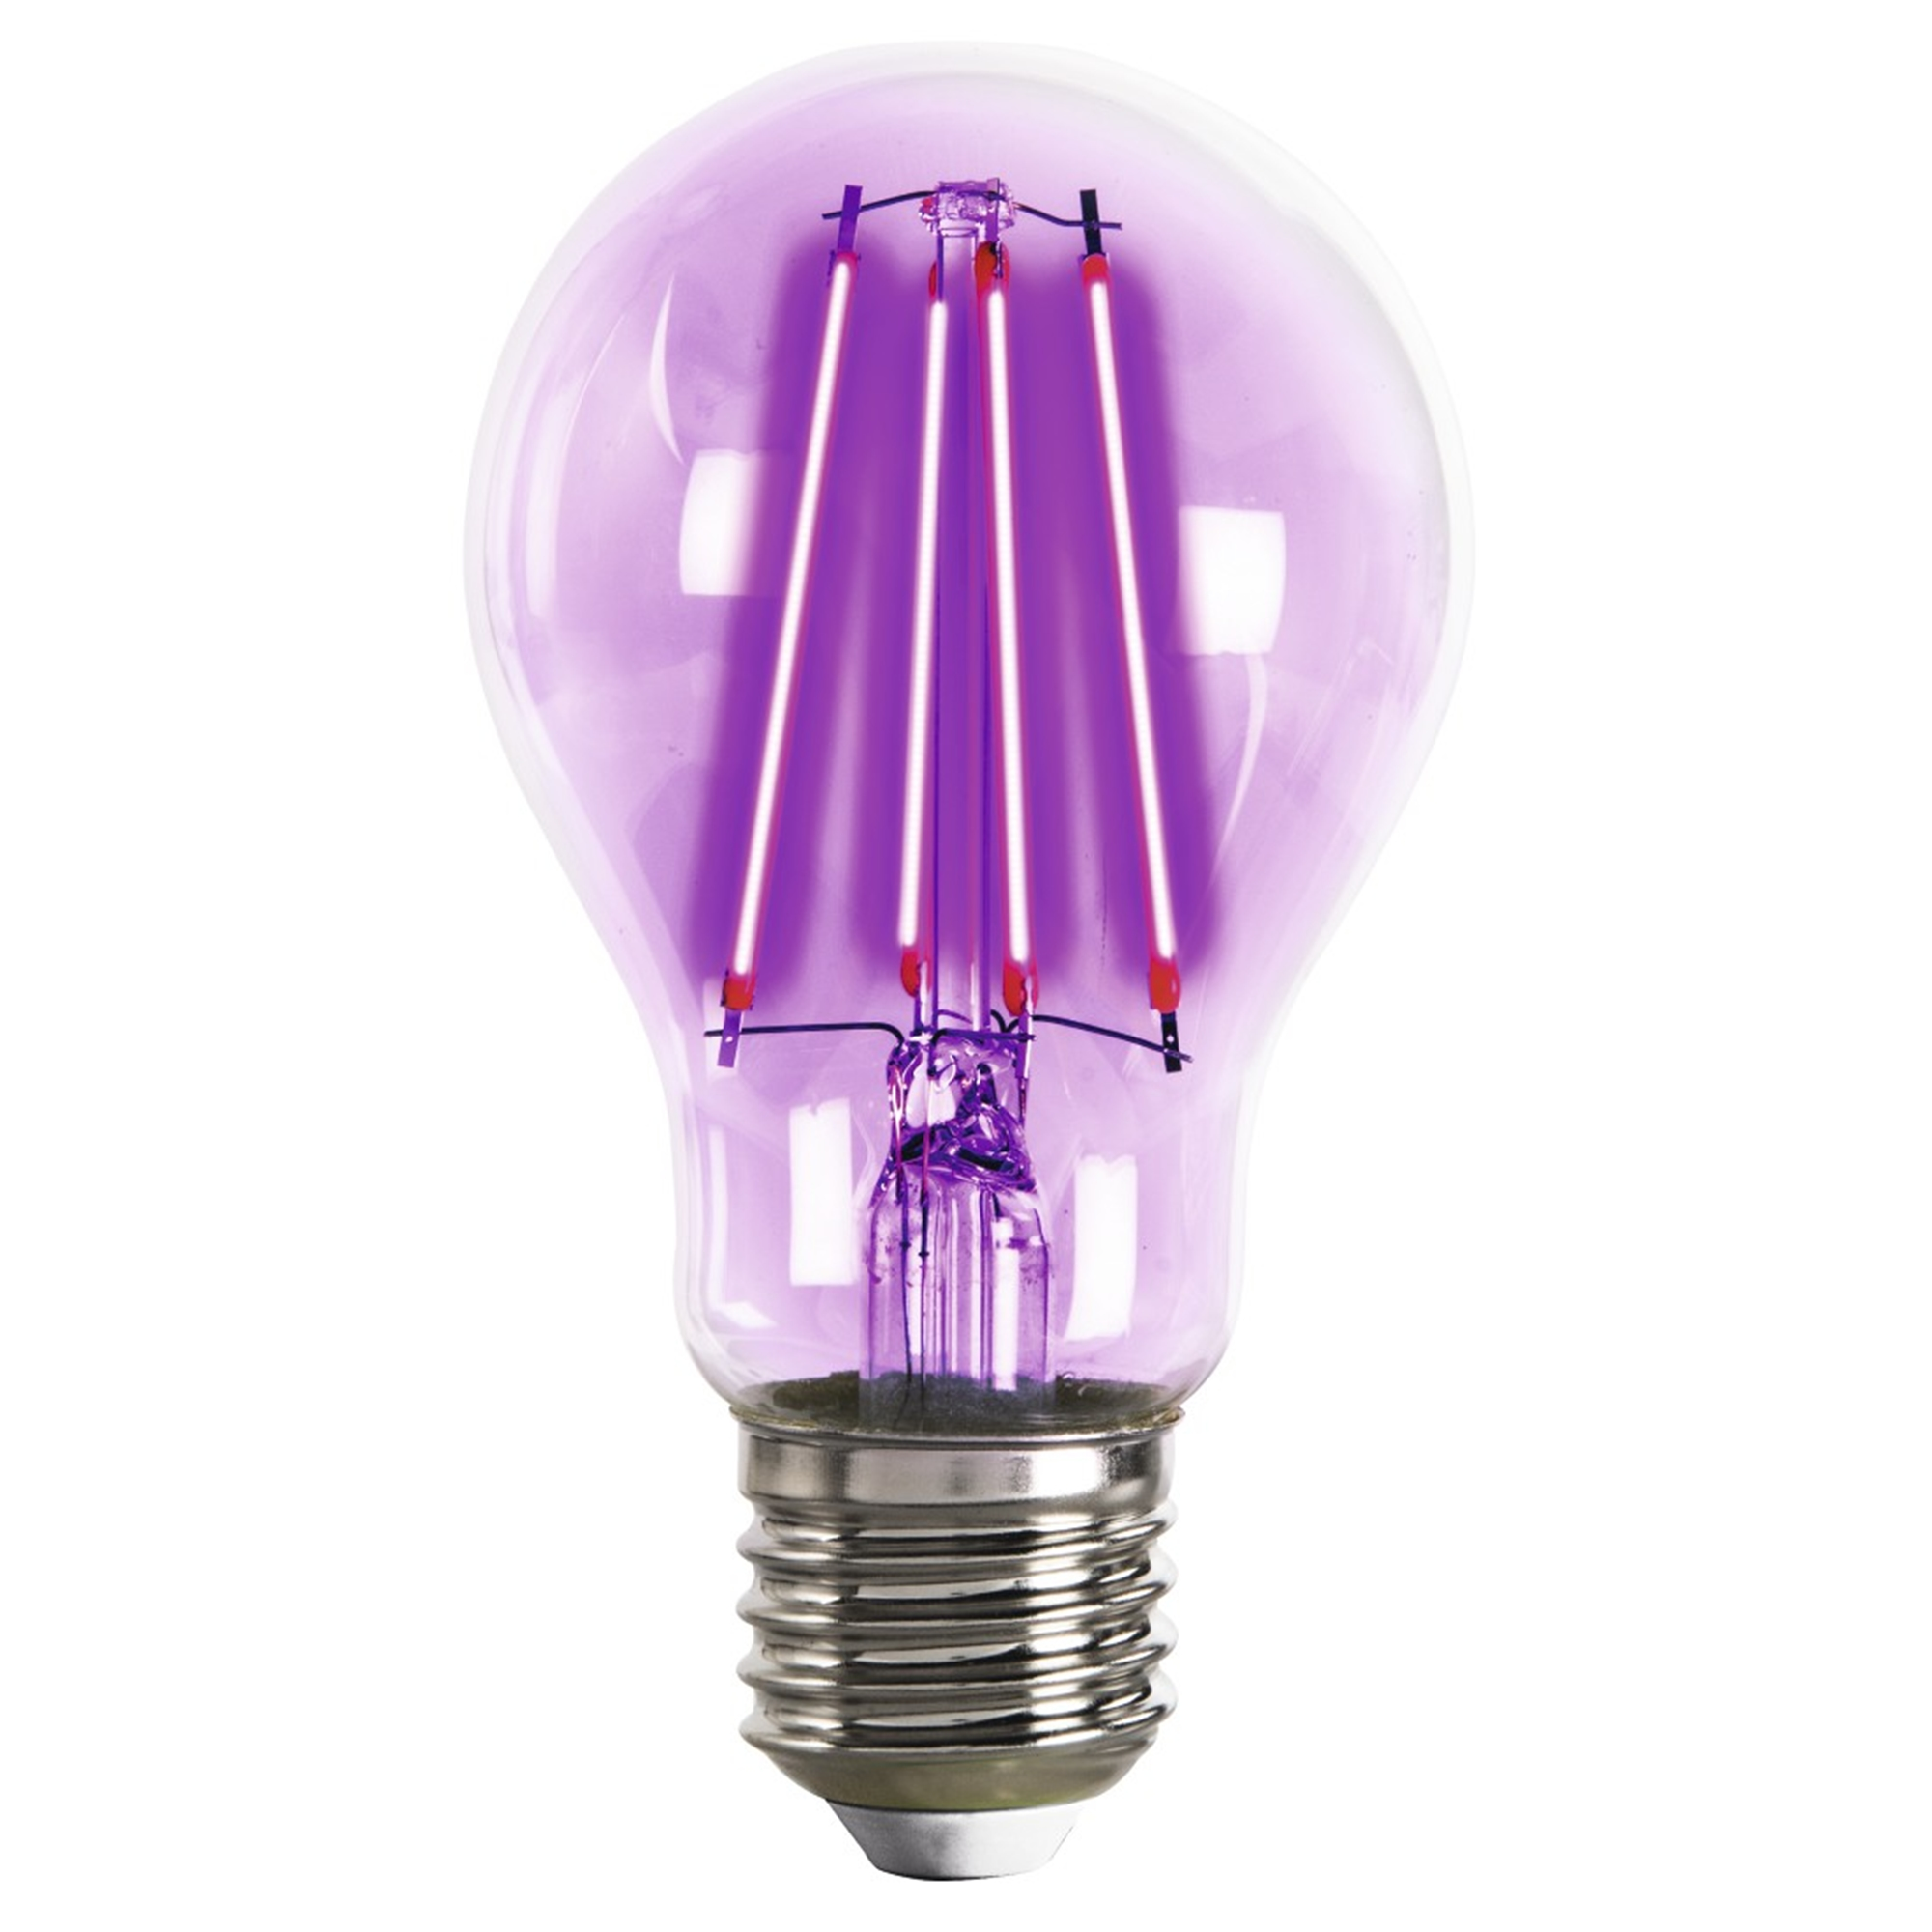 XAVAX Pflanzen-Wachstumslampe, E27, E27 8W Violett LED-Lampe